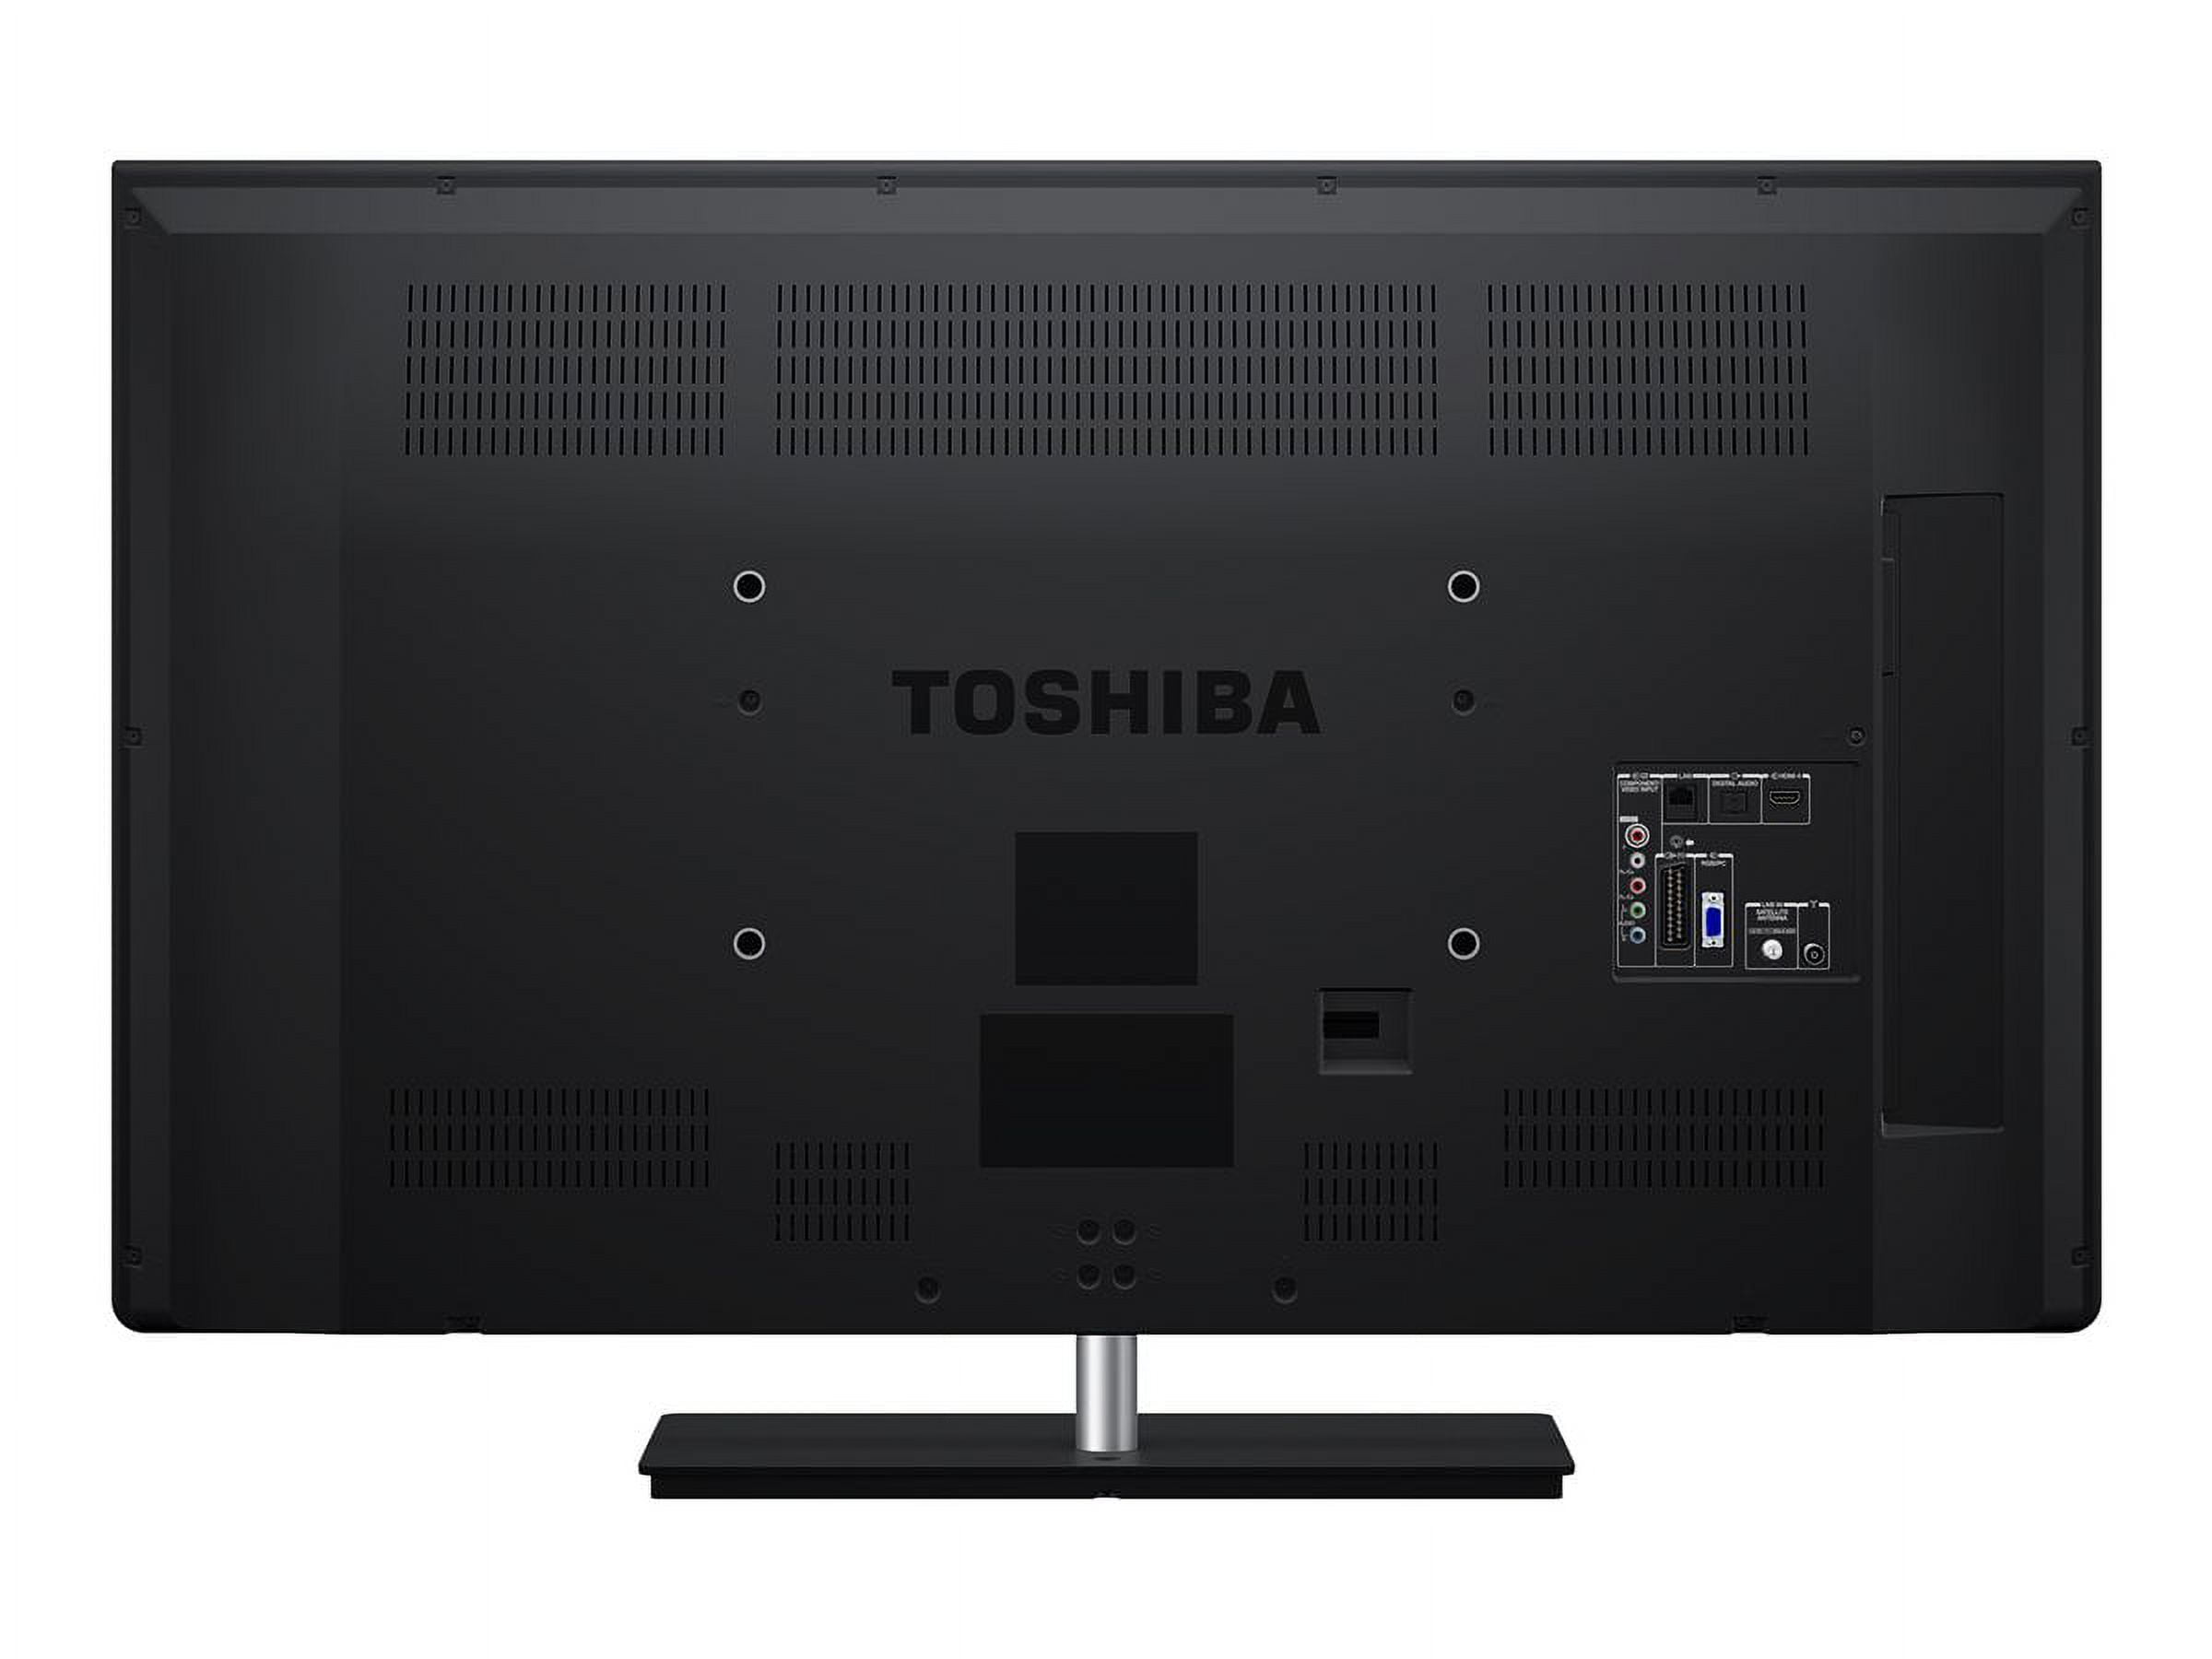 Toshiba 50M550LS #toshiba #toshibatv #smarttv #smarttvtoshiba